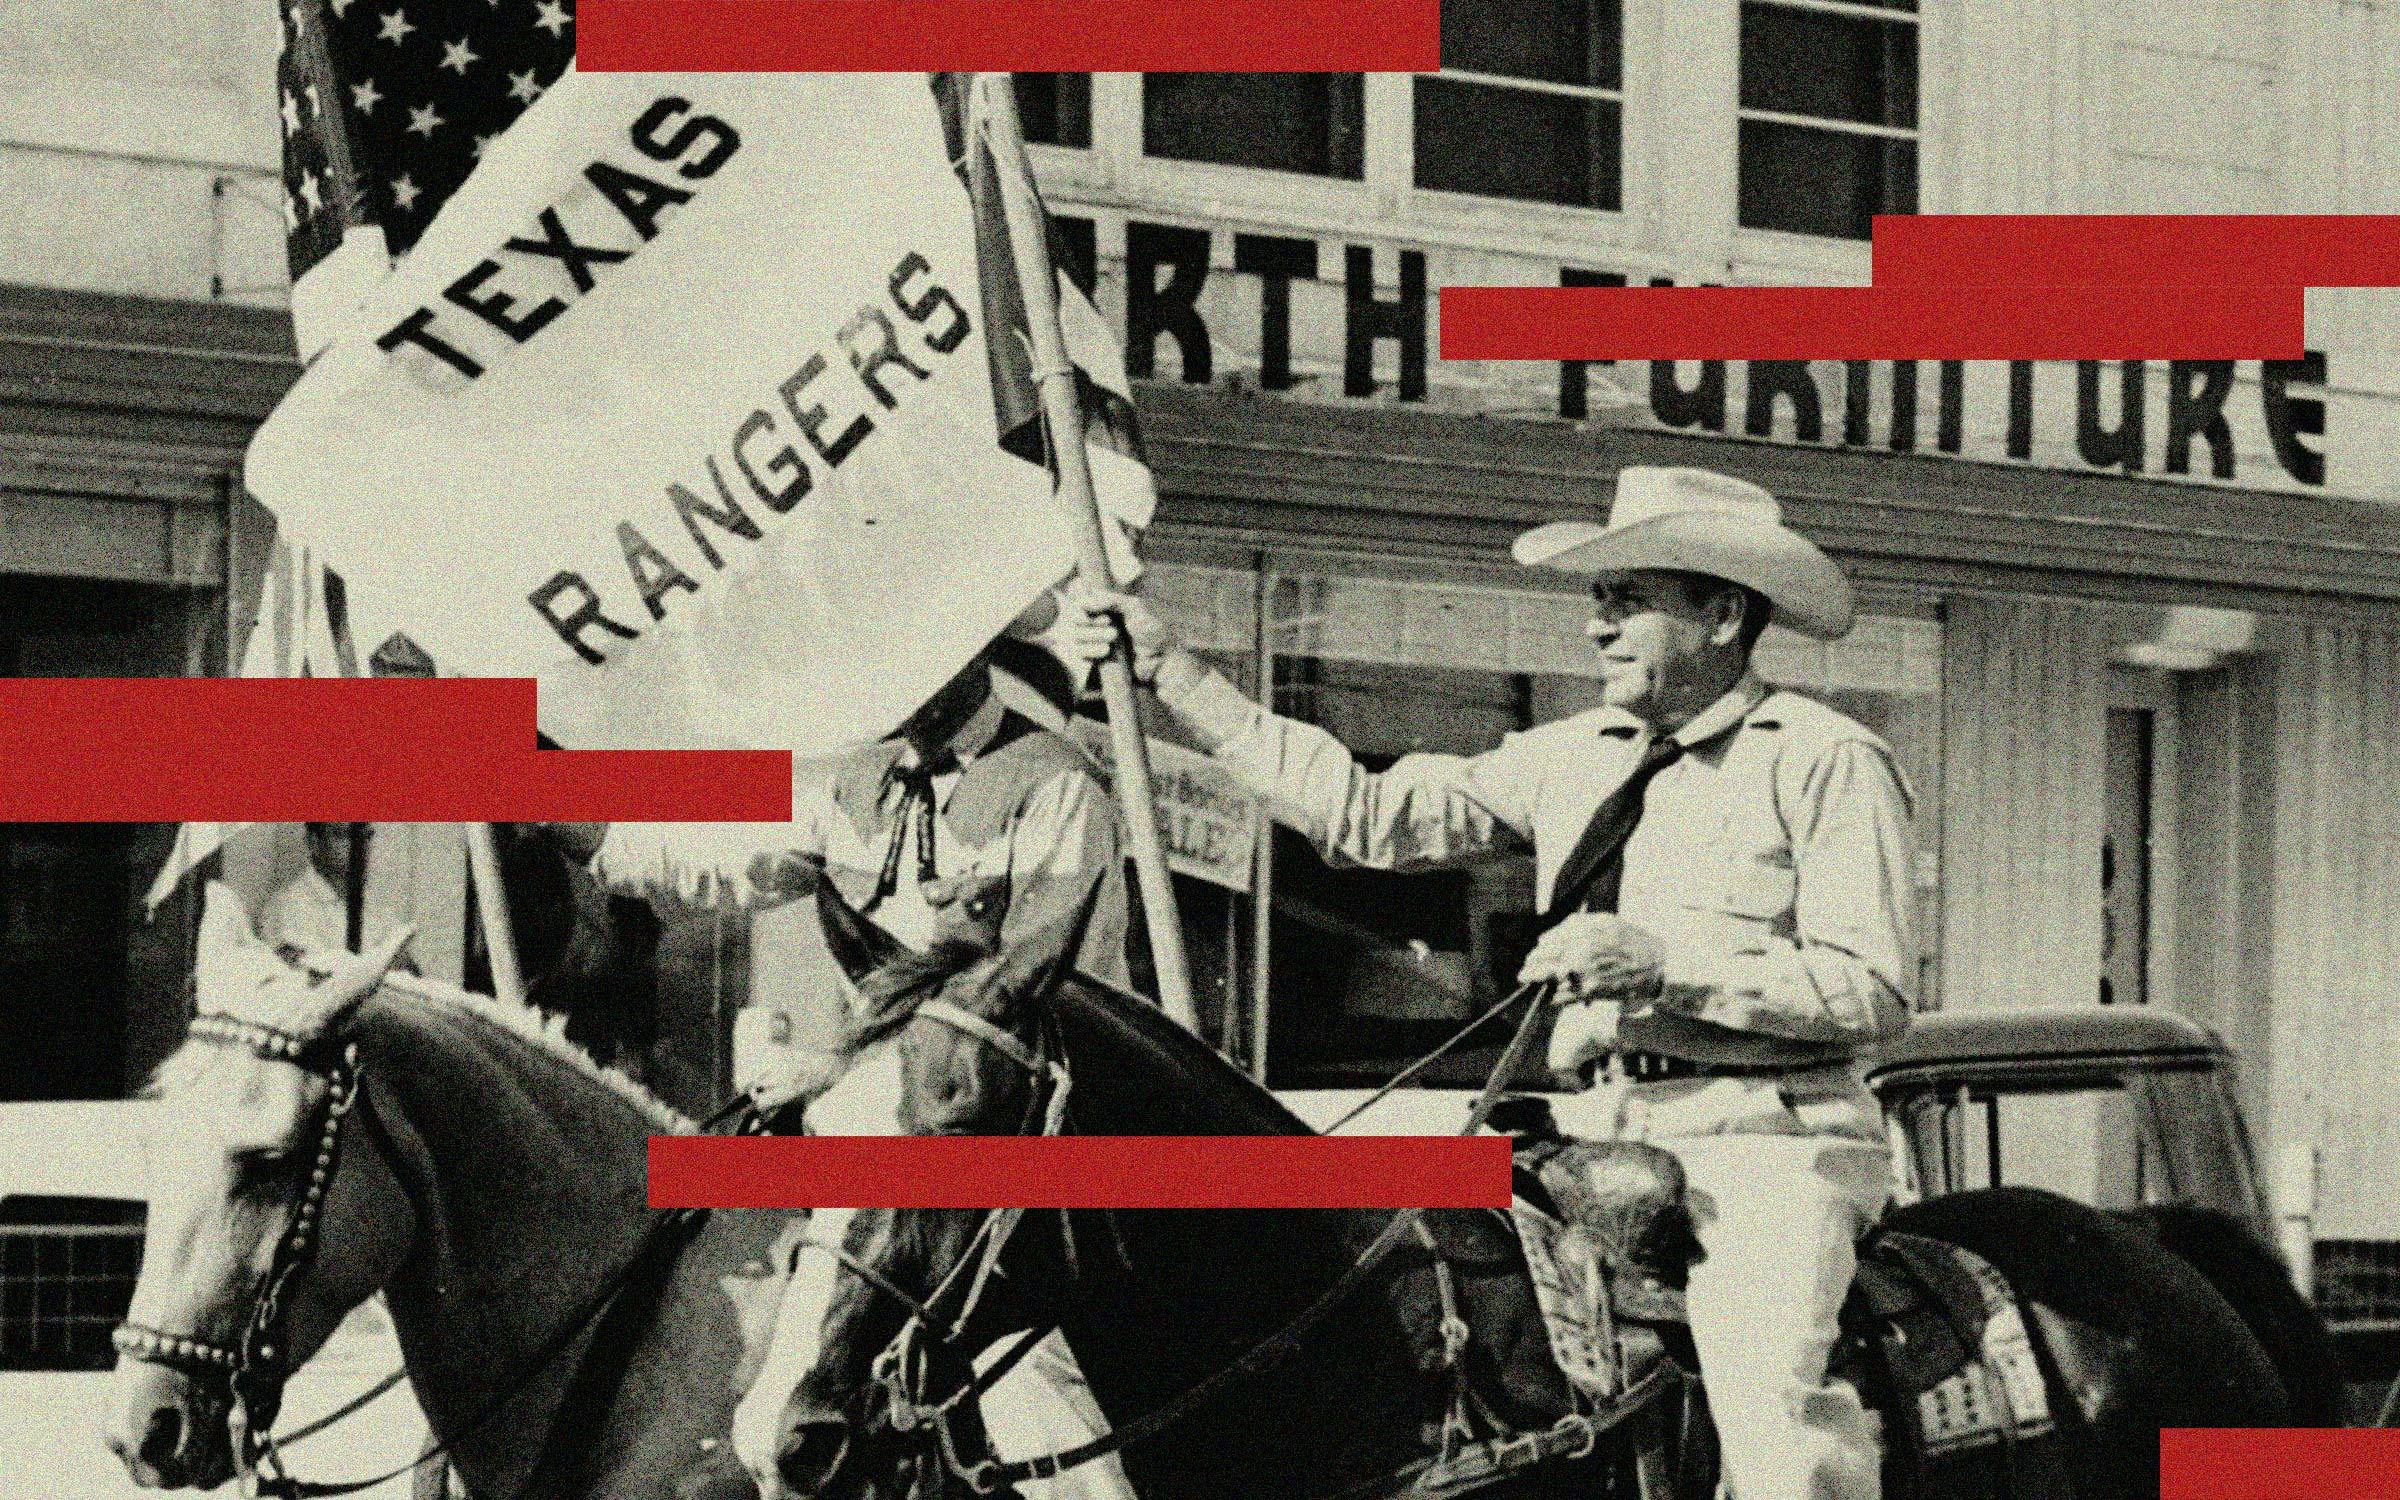 Texas Rangers - Celebrating Hispanic Heritage Month at the